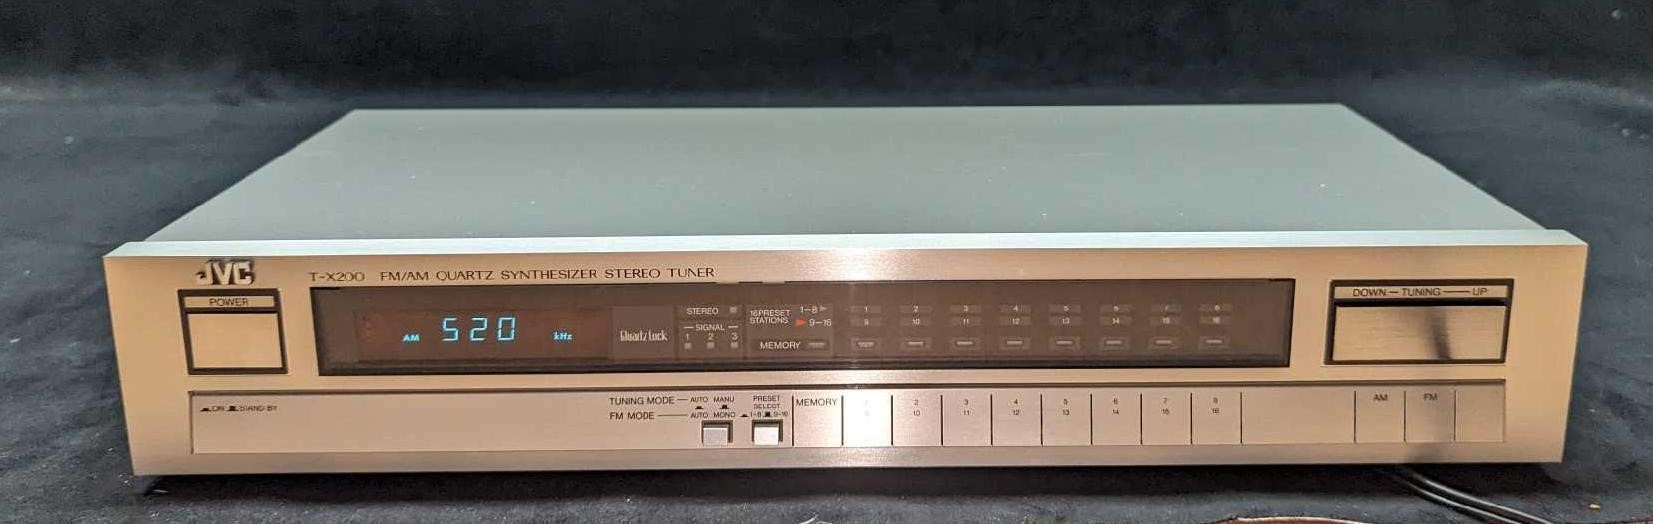 JVC T-X200 FM/AM Quartz Synthesizer Stereo Tuner